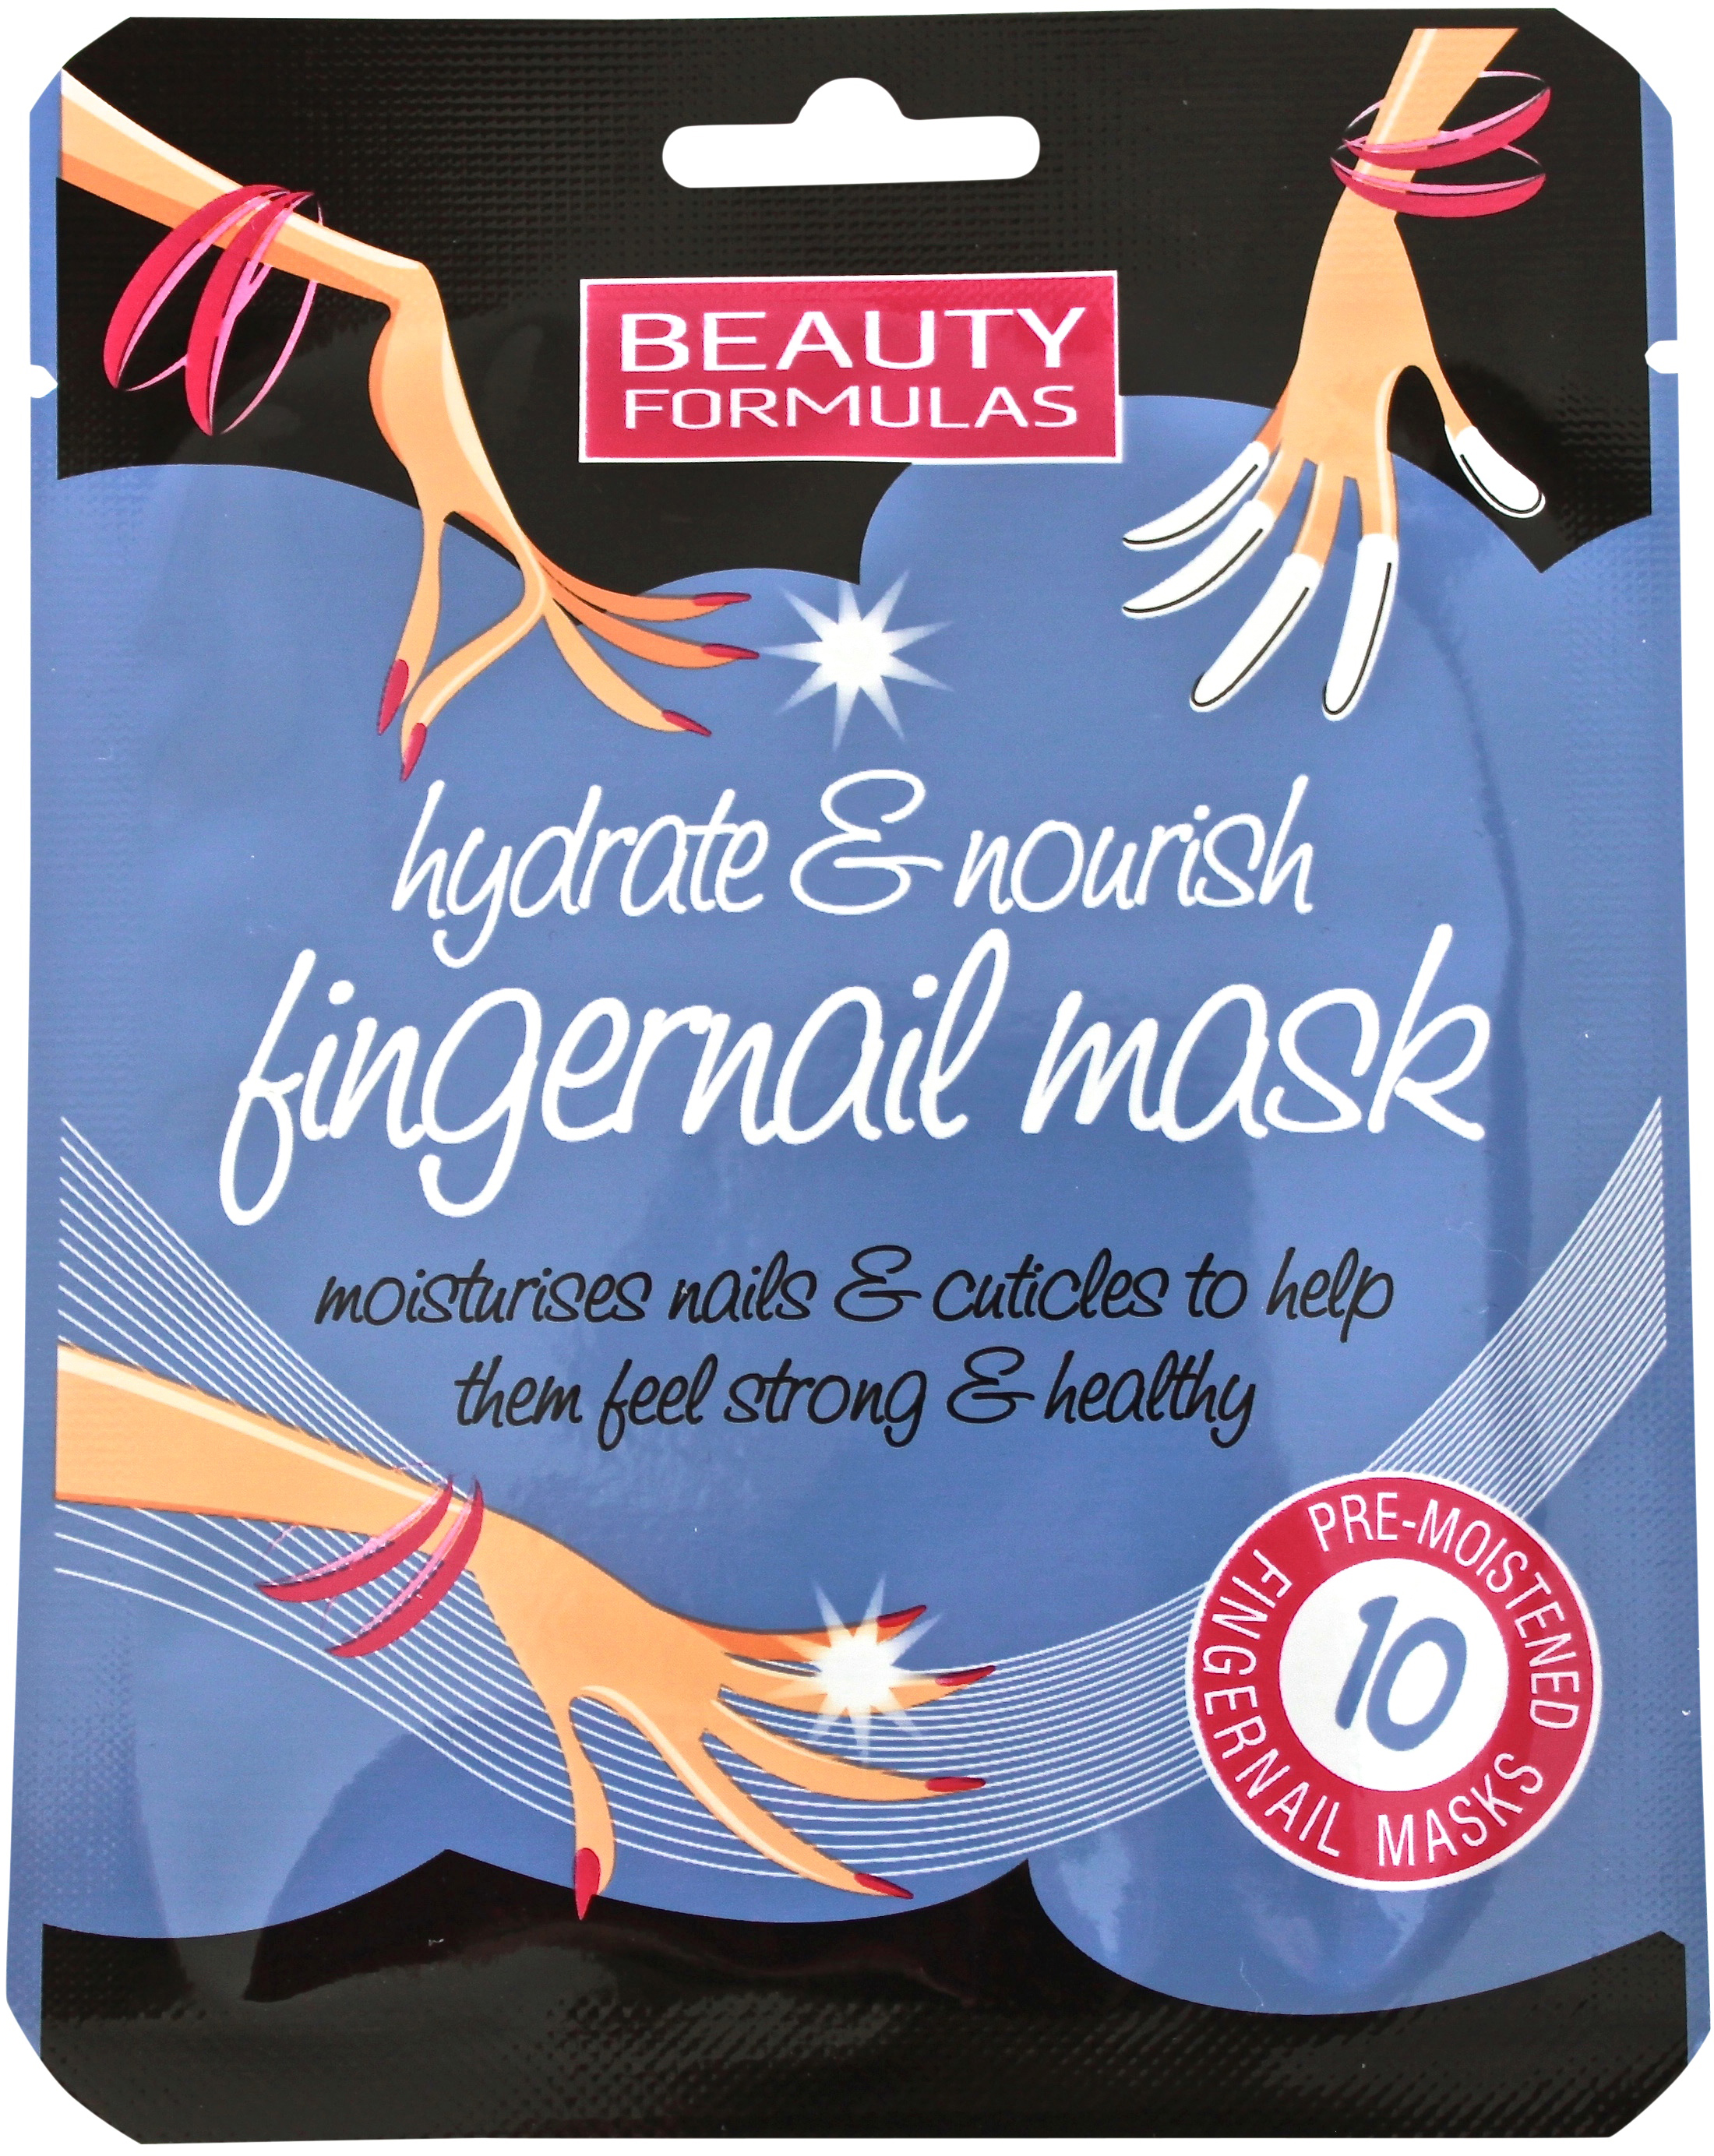 Beauty Formulas Hydrate & Nourish Fingernail Mask